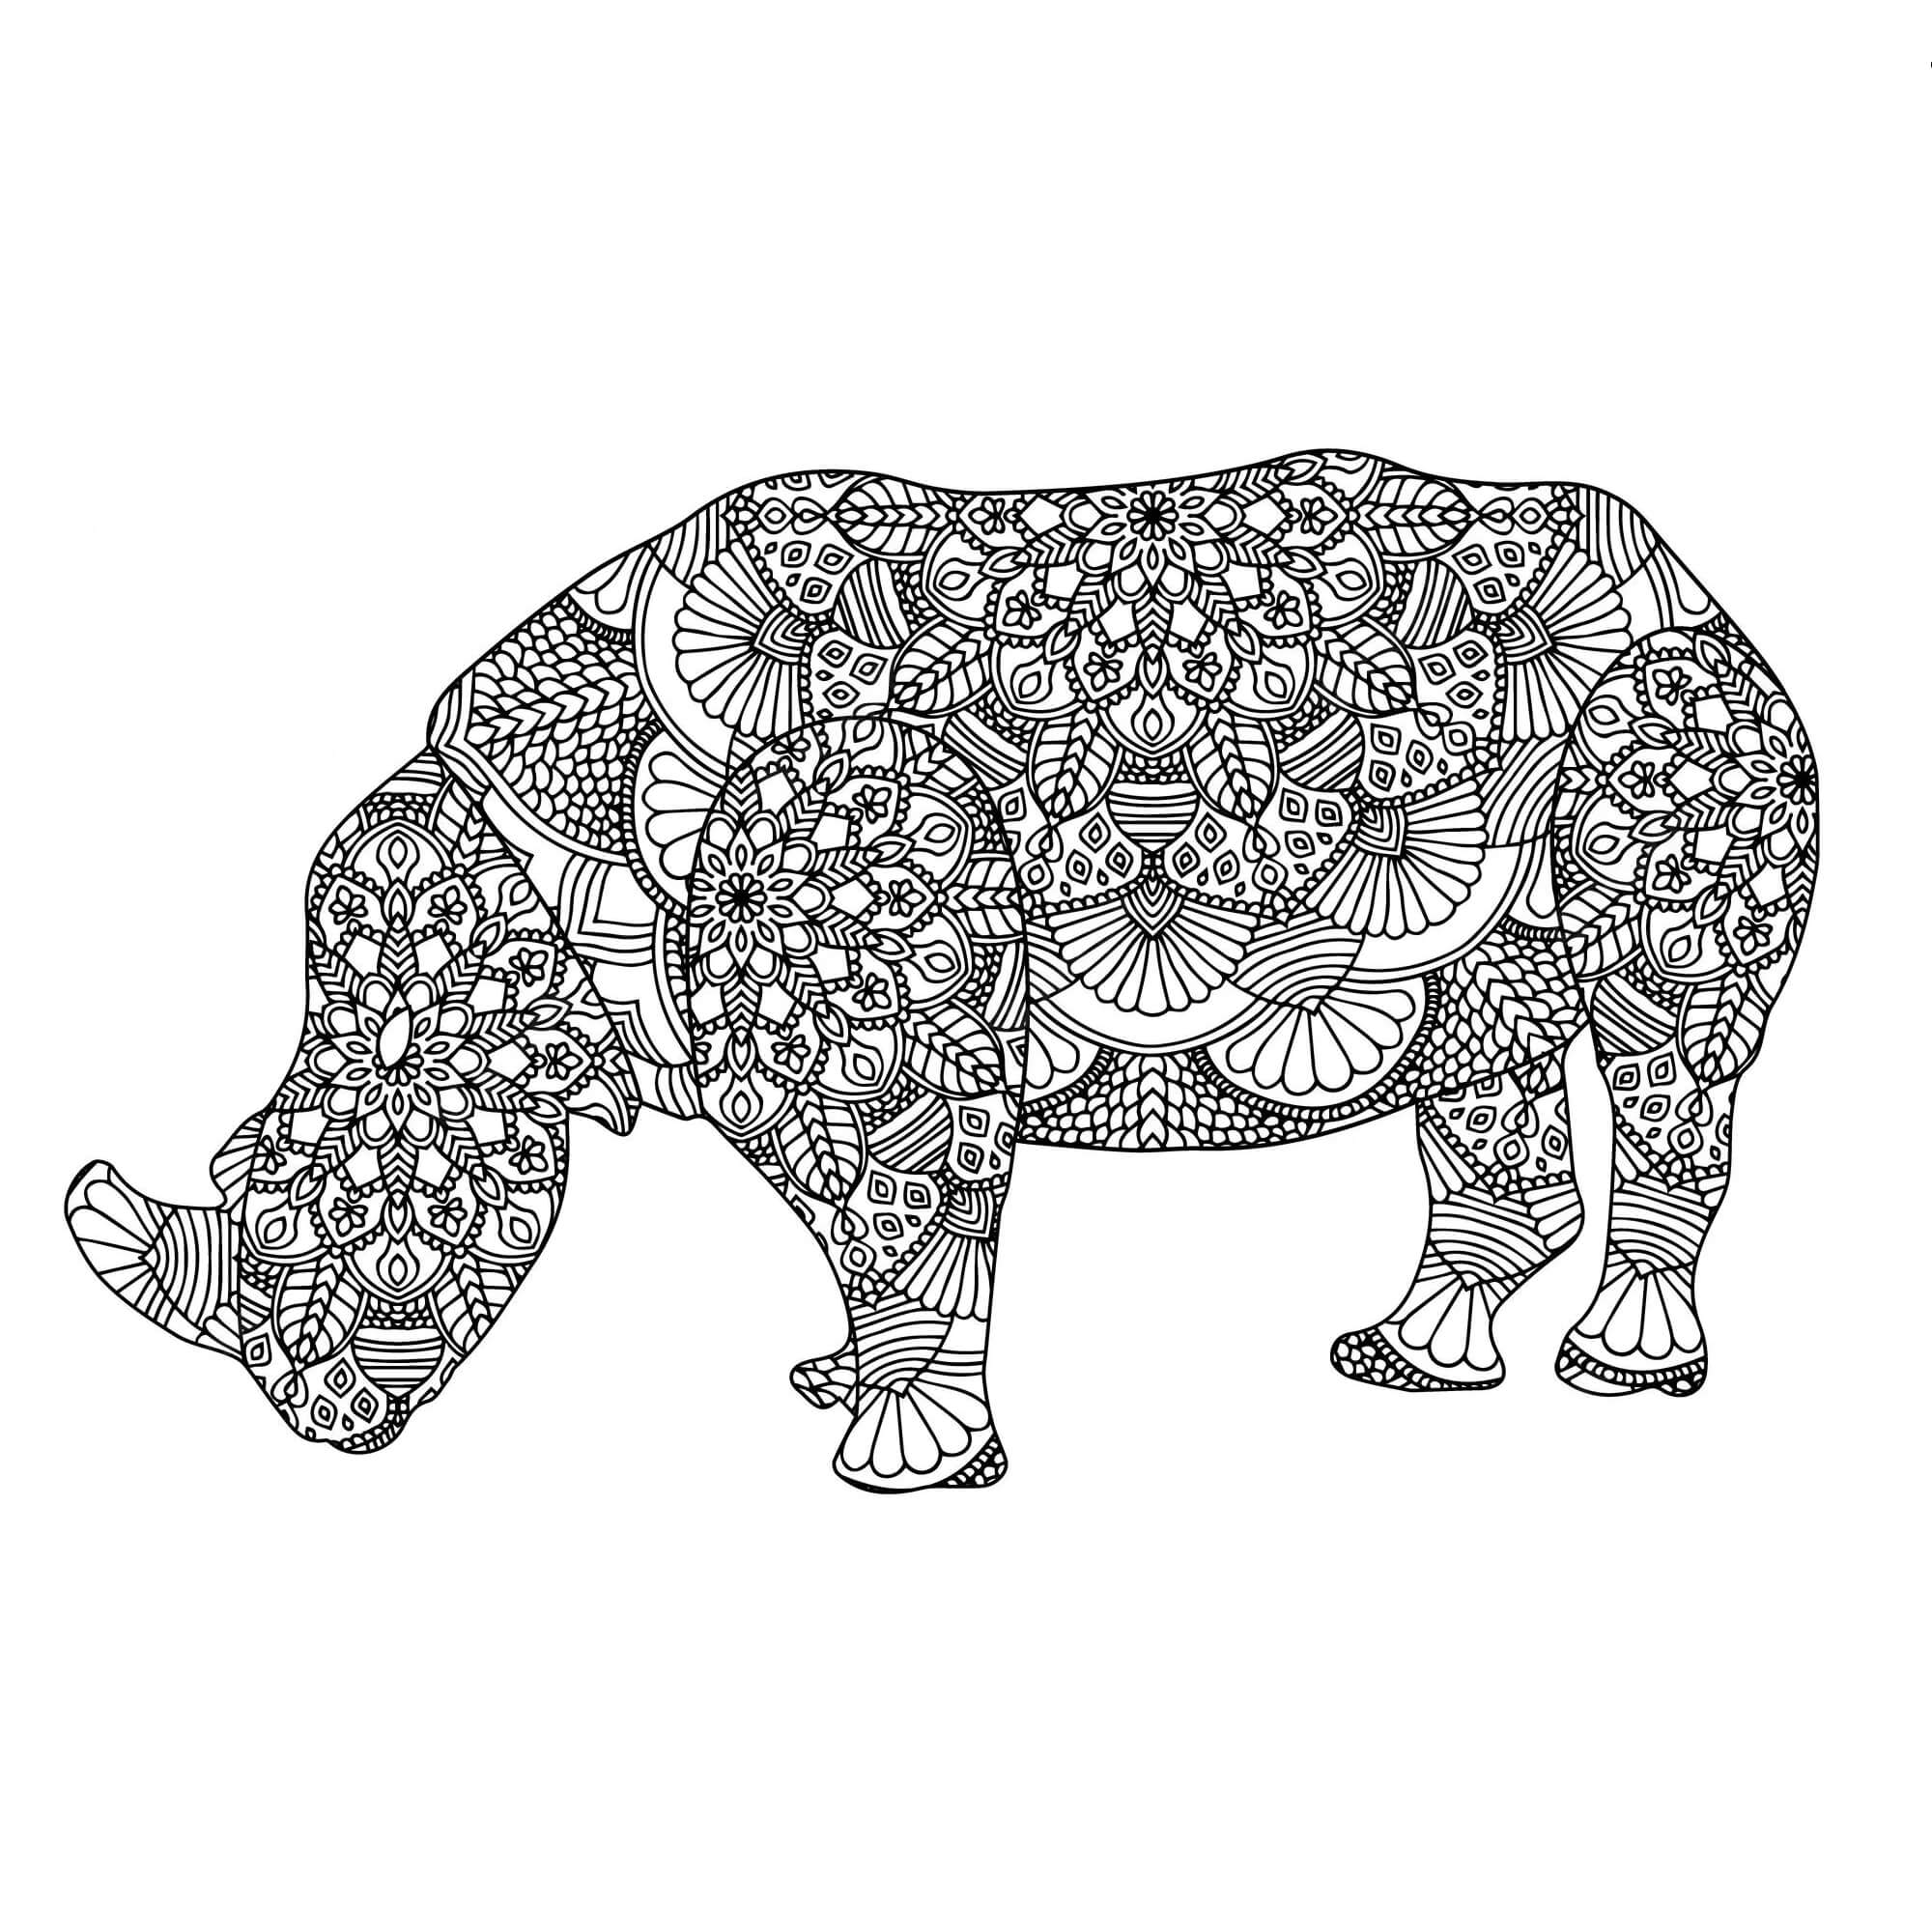 Mandala Rhino Coloring Page - Sheet 2 Mandalas